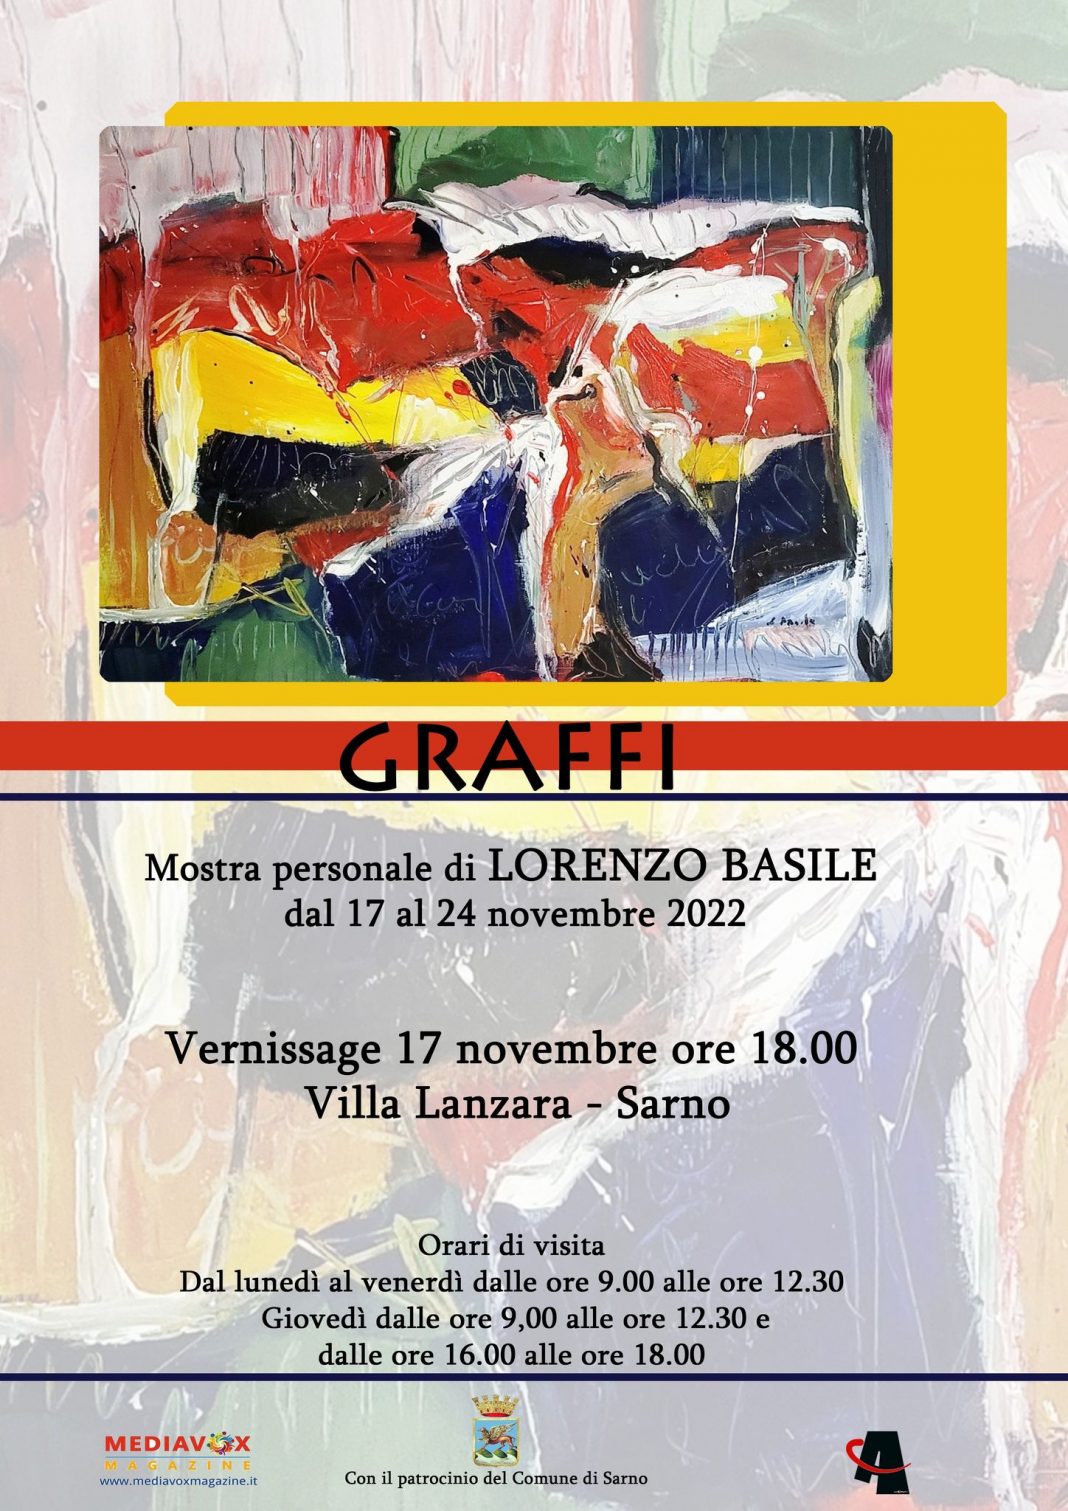 Lorenzo Basile – Graffihttps://www.exibart.com/repository/media/formidable/11/img/e7d/LOCANDINA-GRAFFI-1068x1511.jpg